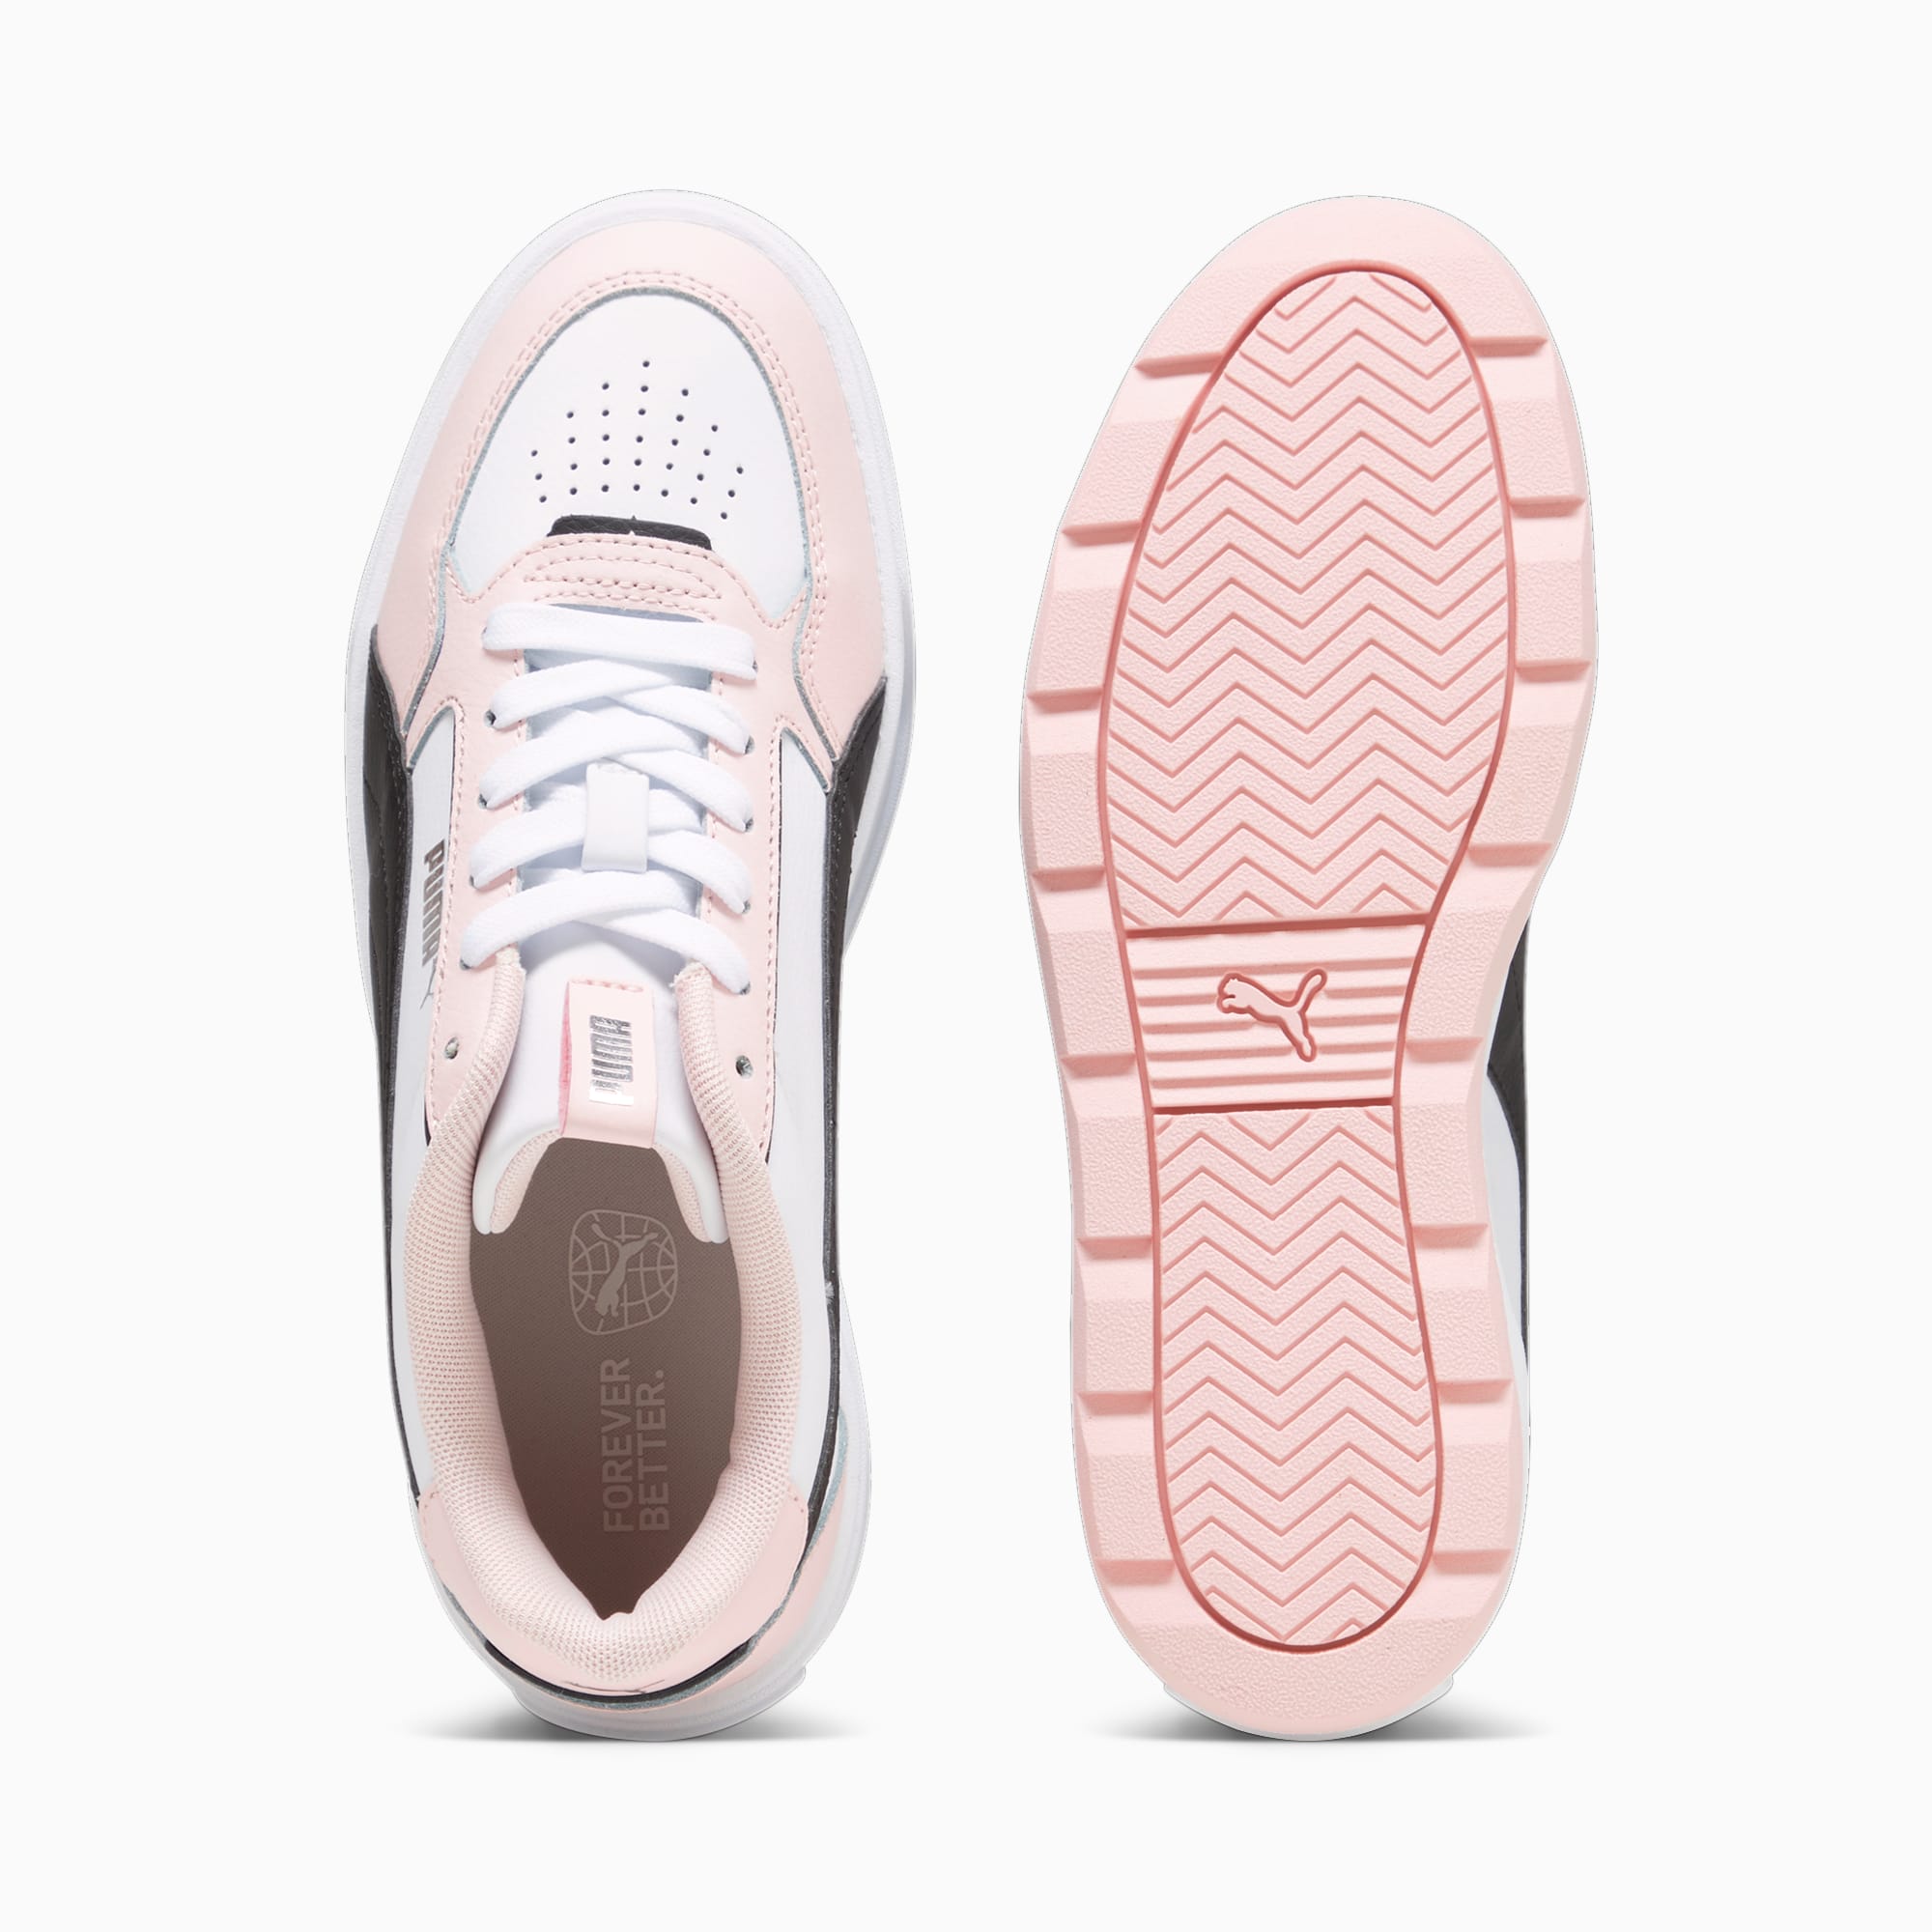 PUMA Karmen Rebelle Sneakers Women, White/Black/Frosty Pink, Size 35,5, Shoes